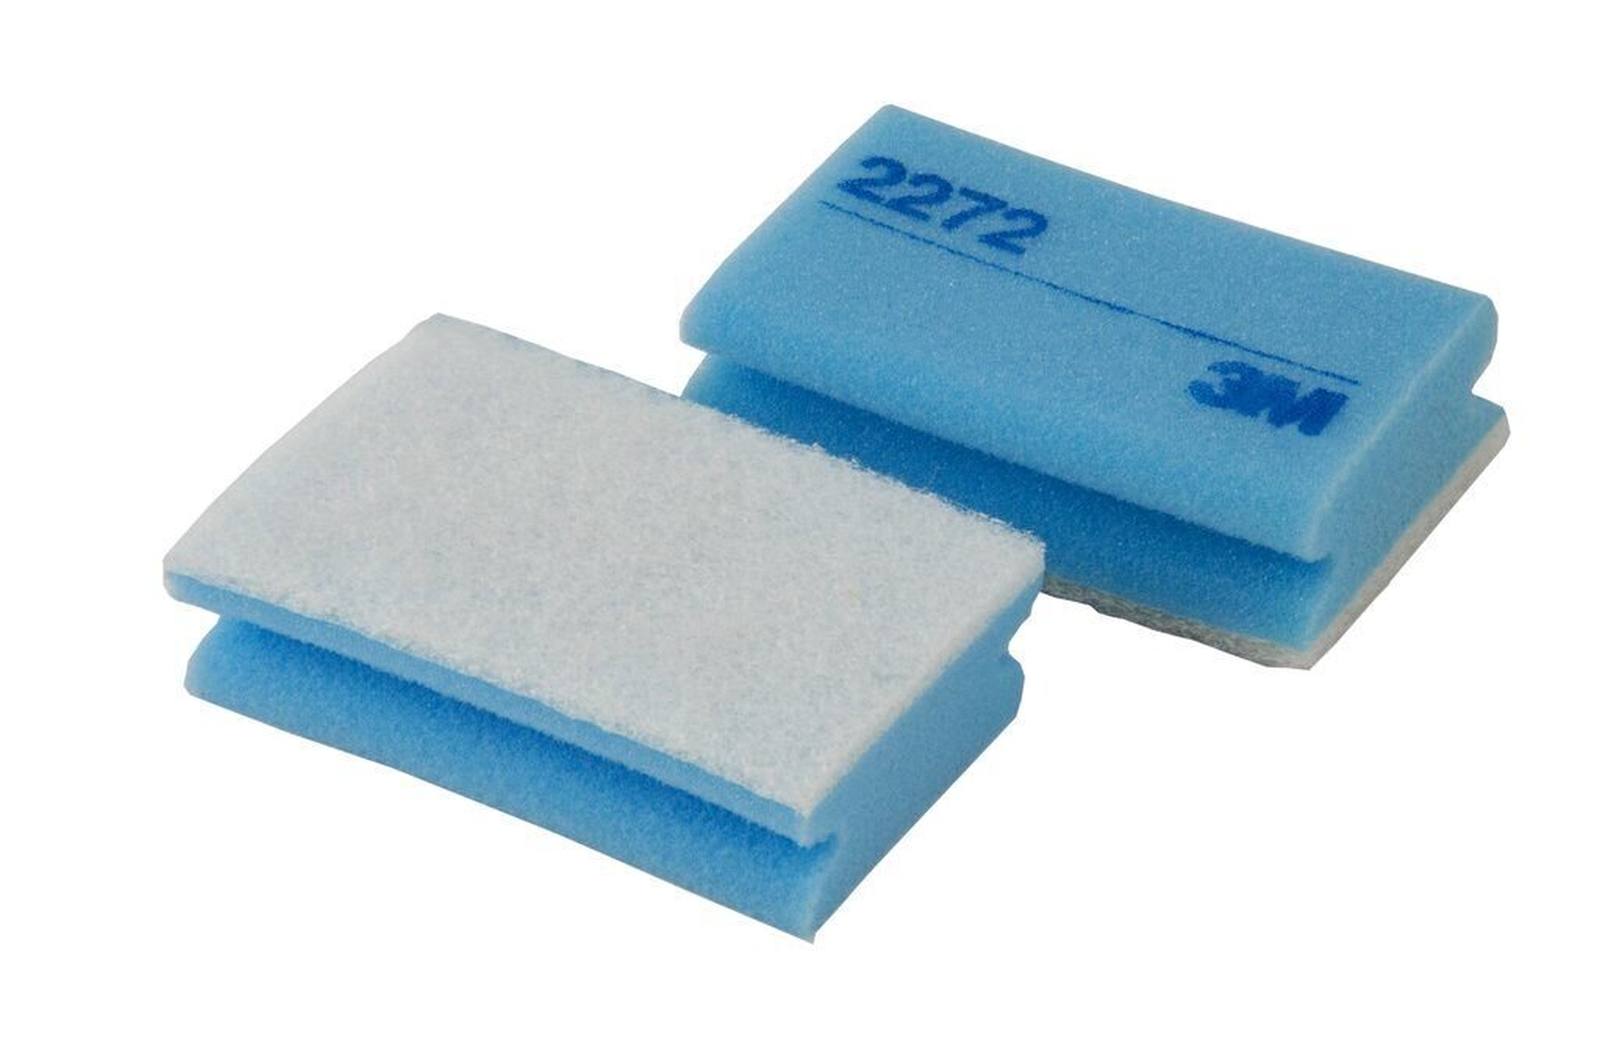 3M Scotch-Brite Esponja de limpieza 2272 azul/blanco 95mmx150mm